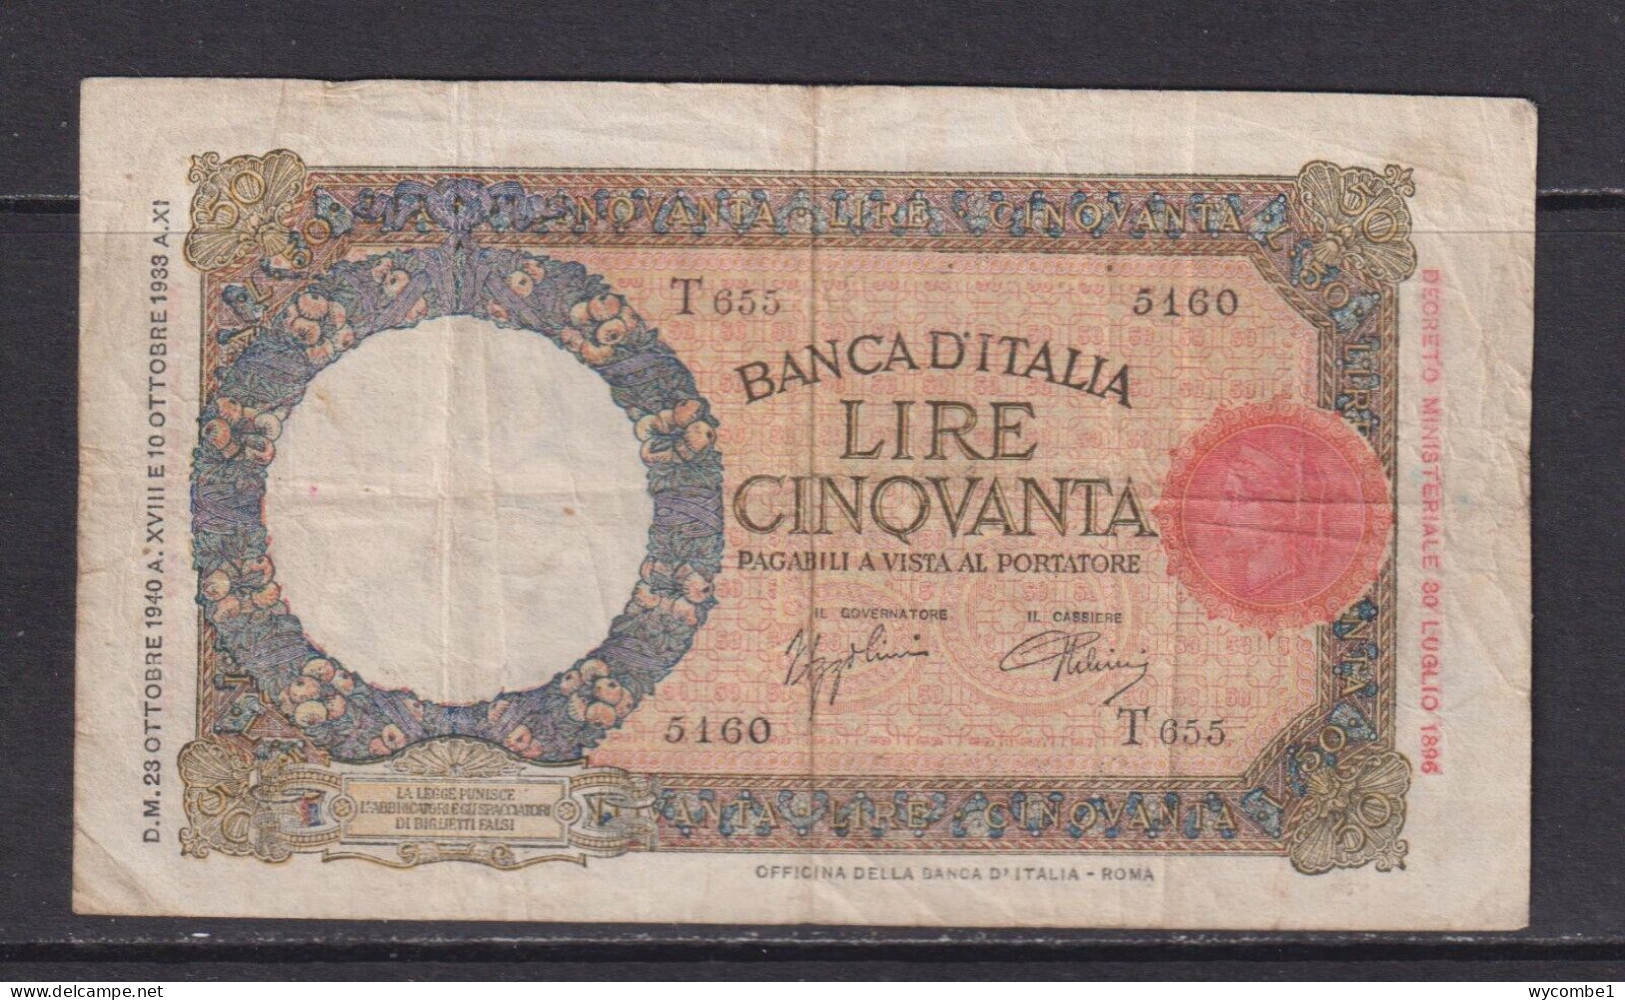 ITALY - 1940 50 Lira Circulated Banknote - 50 Liras